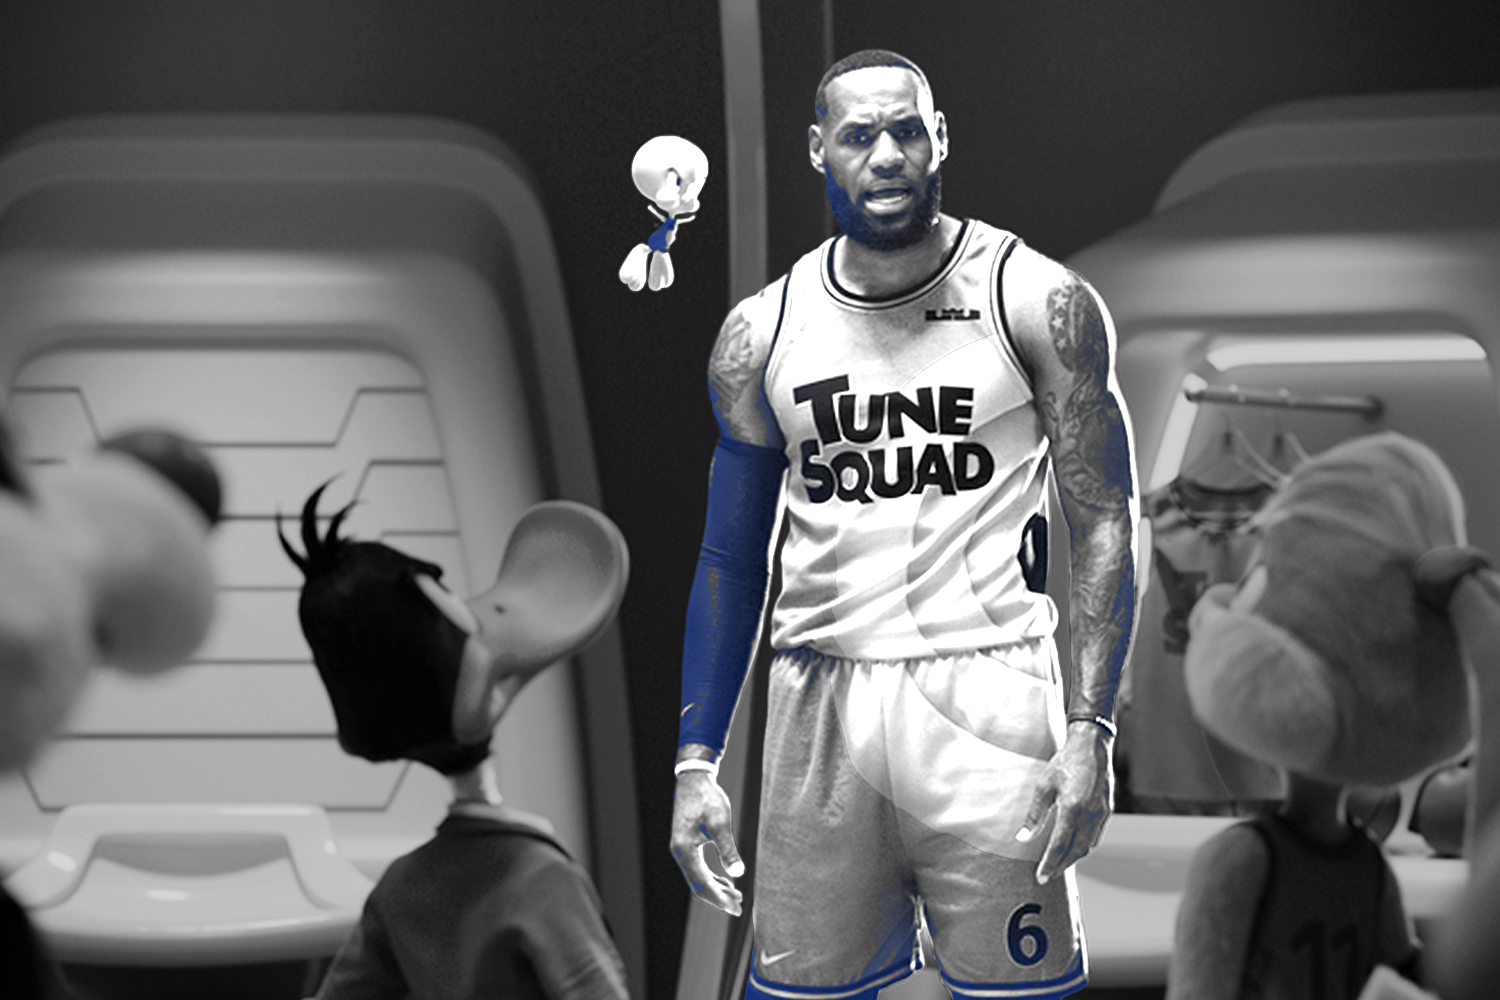 LeBron James unveils Tune Squad uniforms for upcoming 'Space Jam' sequel 